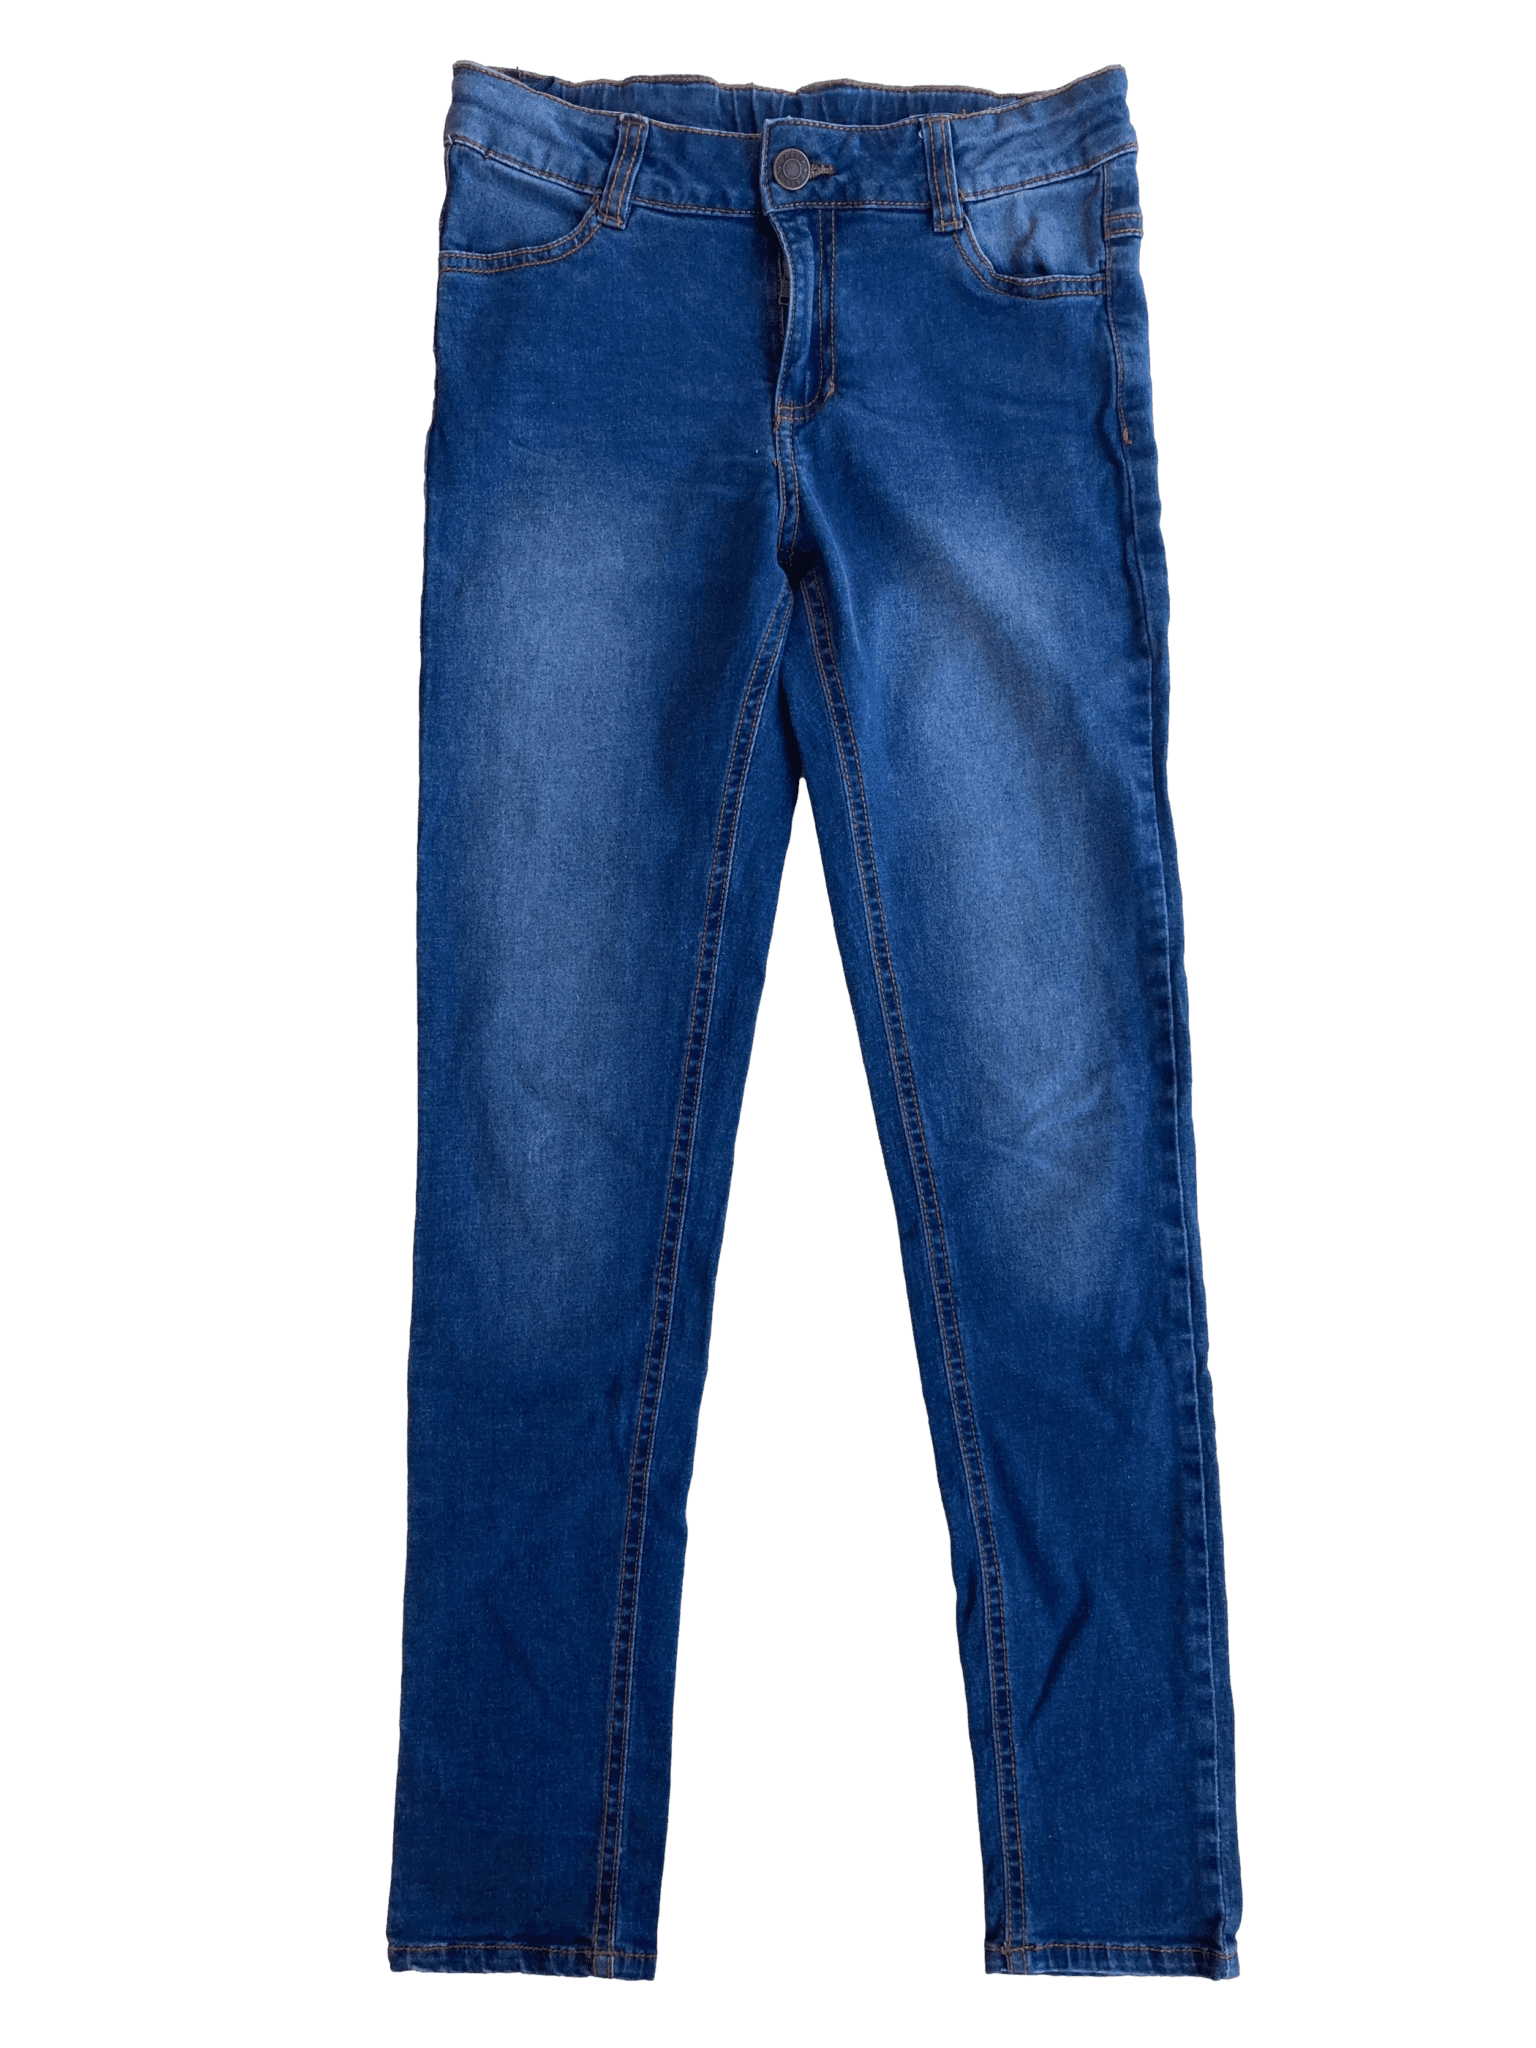 Calças Regular - Azul-Marinho · Dkny Jeans · El Corte Inglés